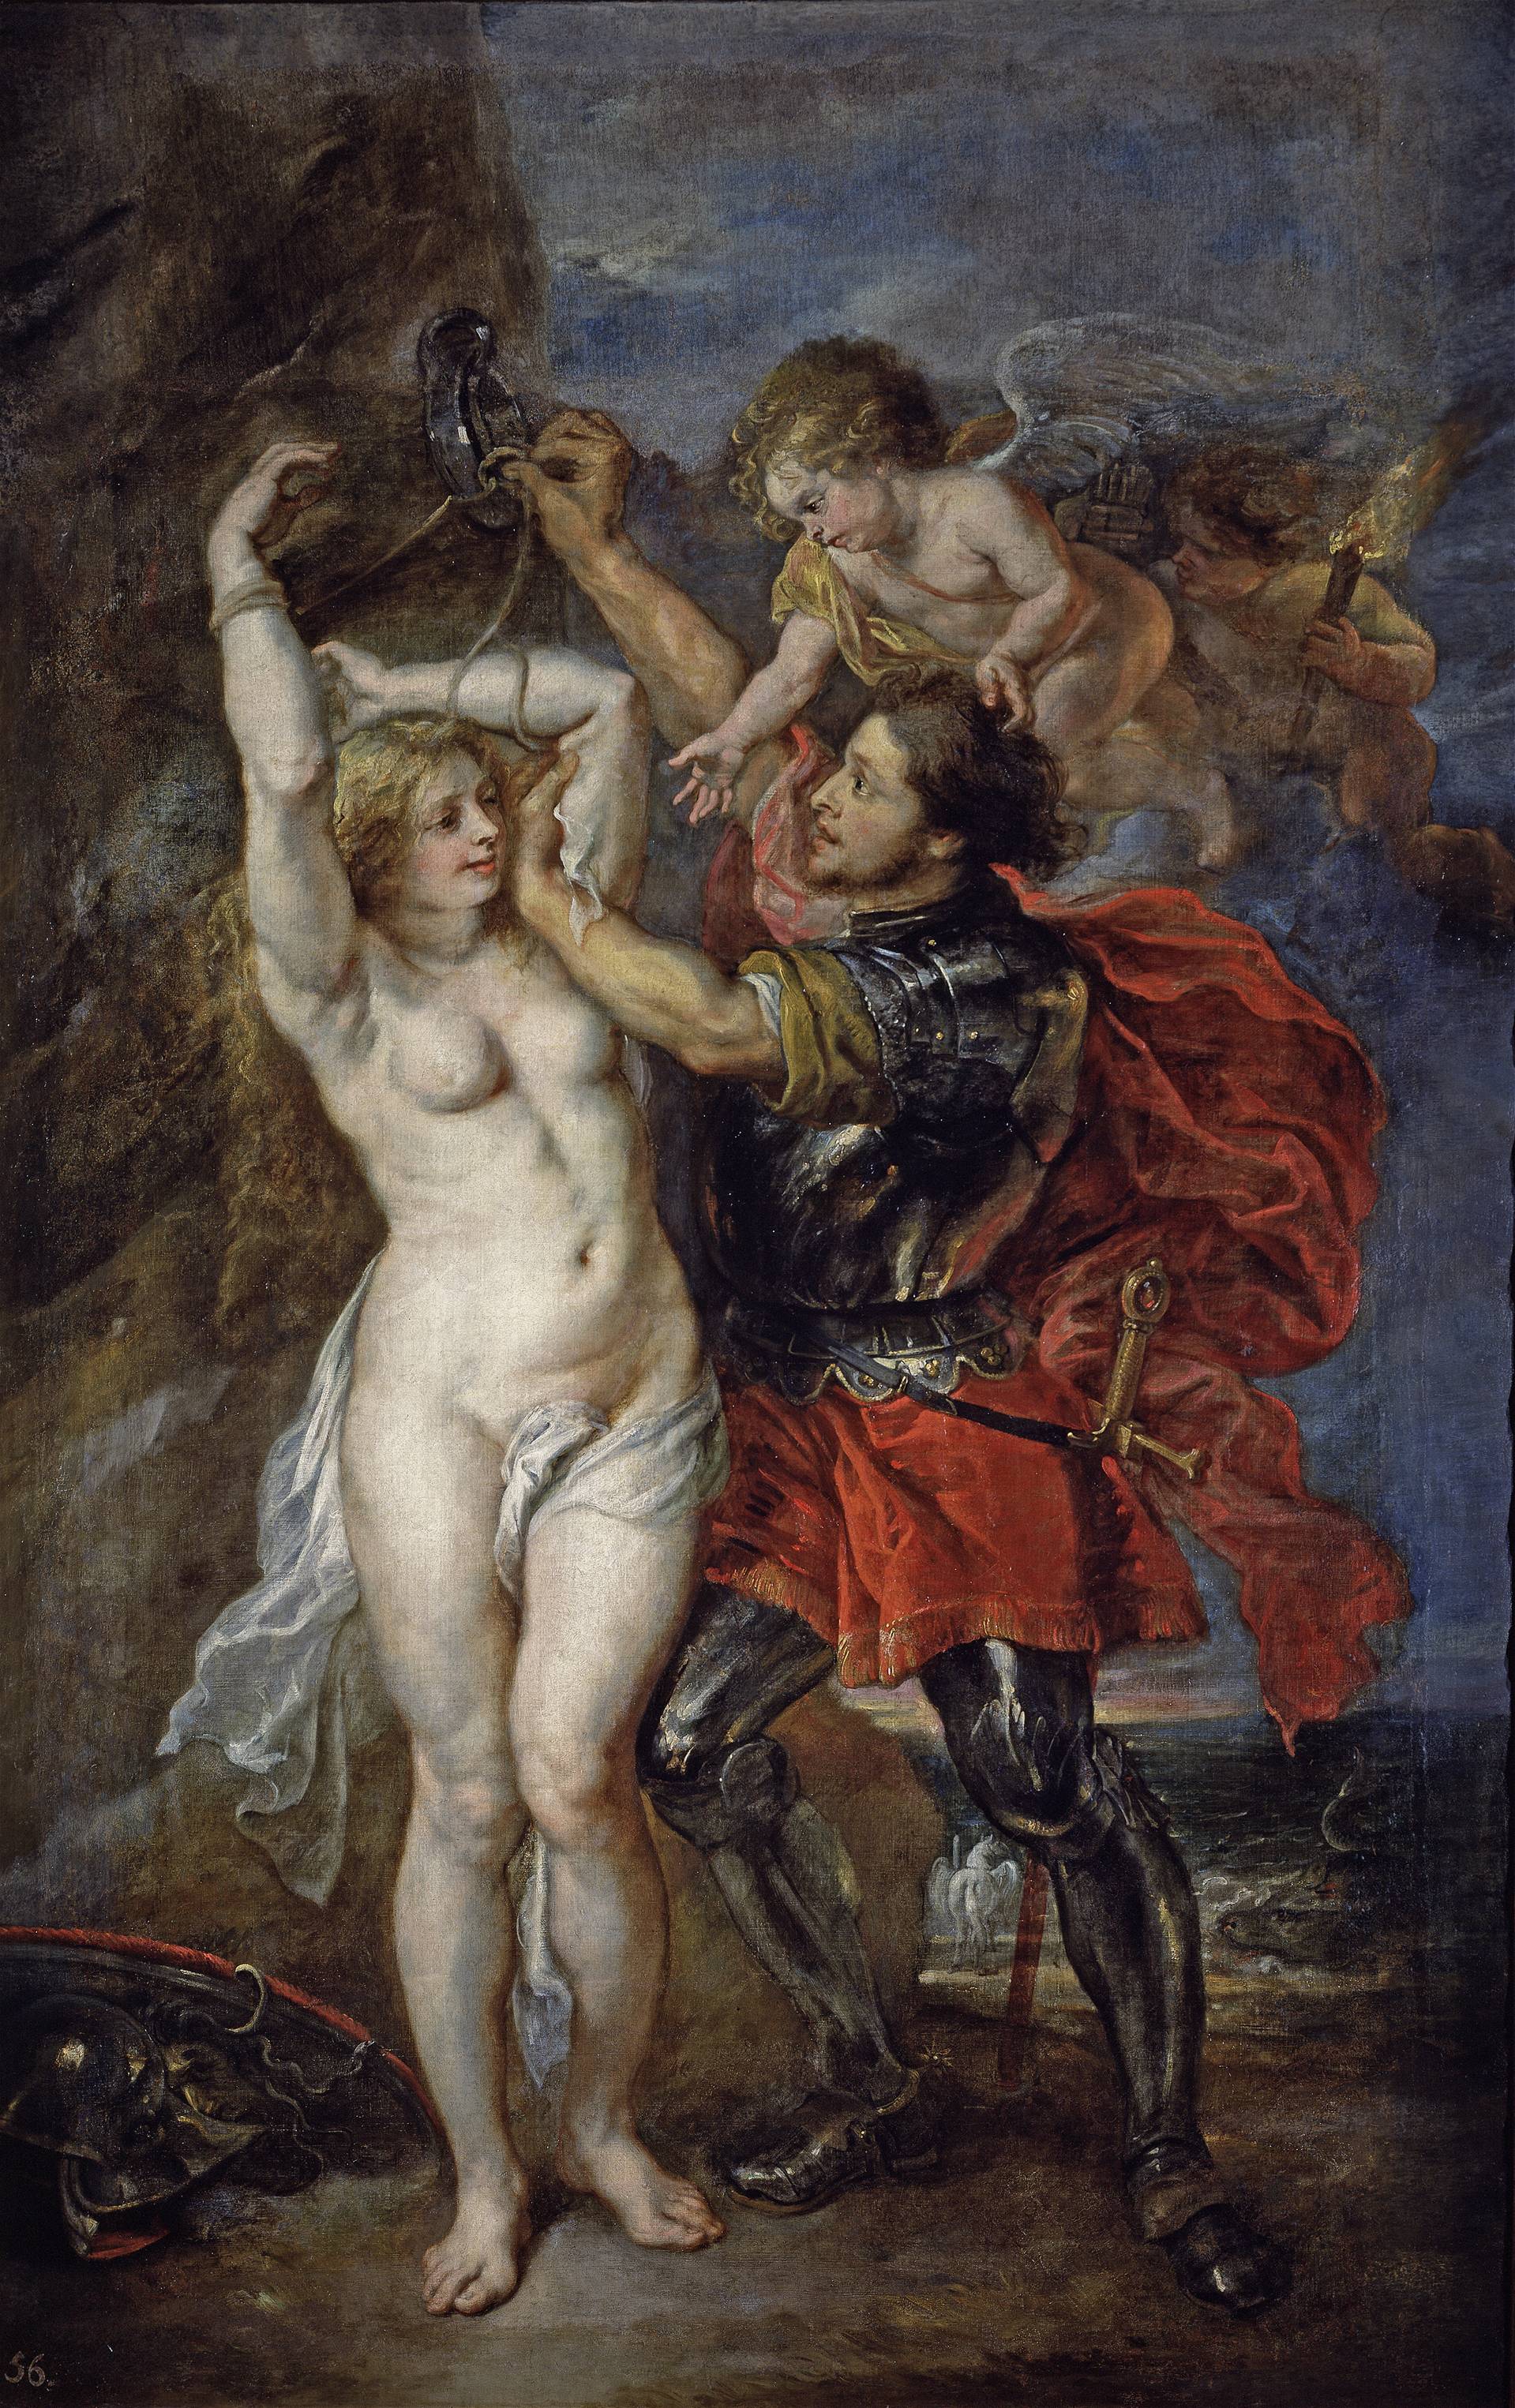 Peter Paul Rubens (1639-1640)